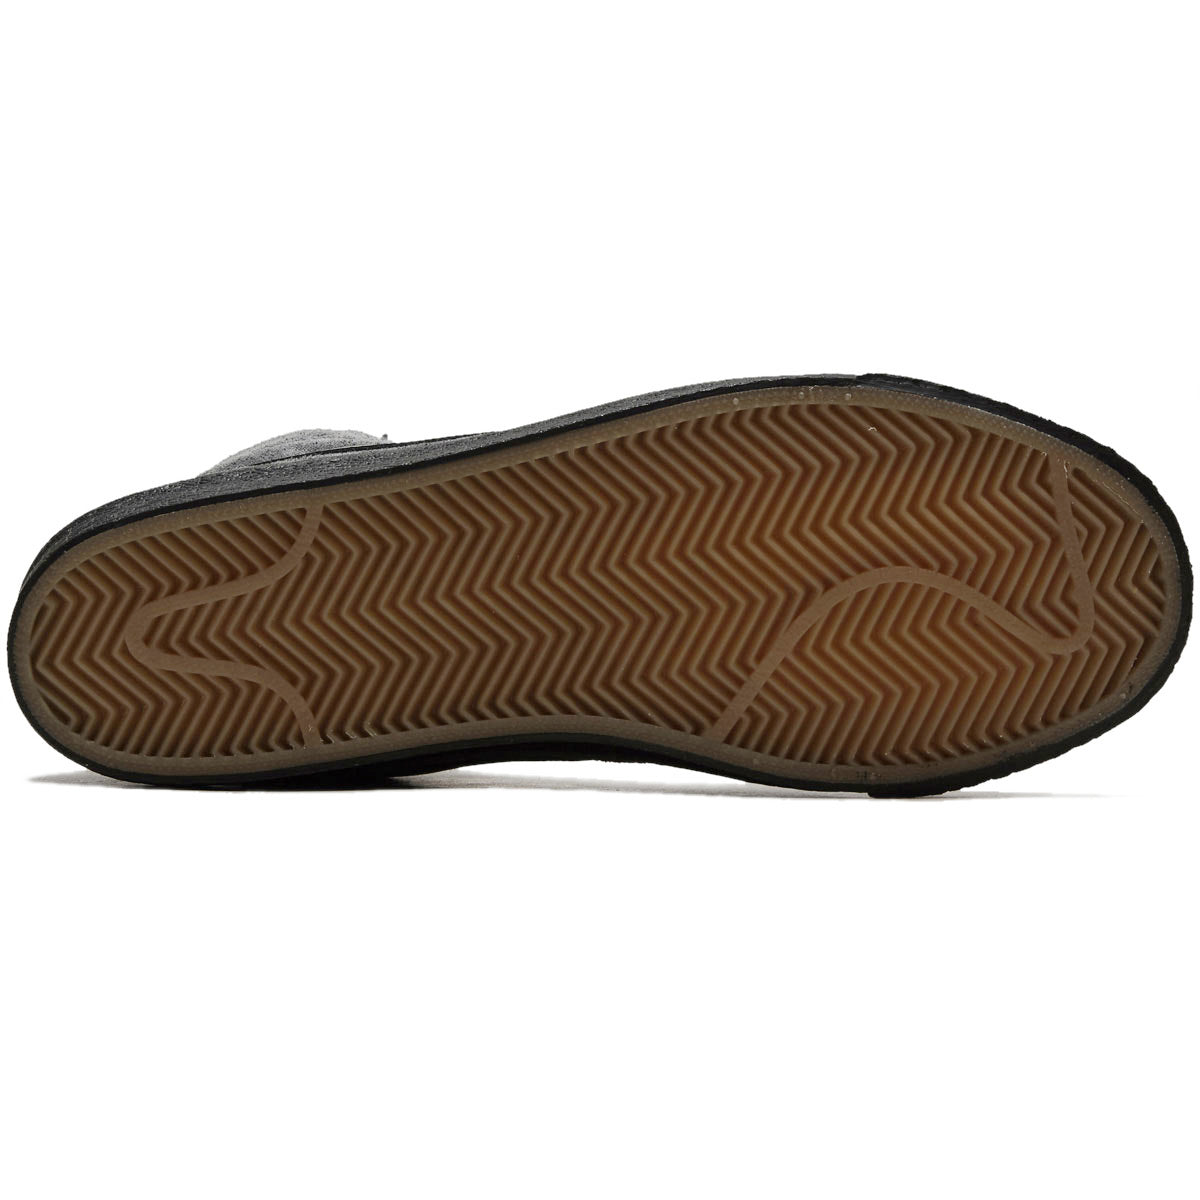 Nike SB Zoom Blazer Mid Shoes - Anthracite/Black/Anthracite/Black image 4